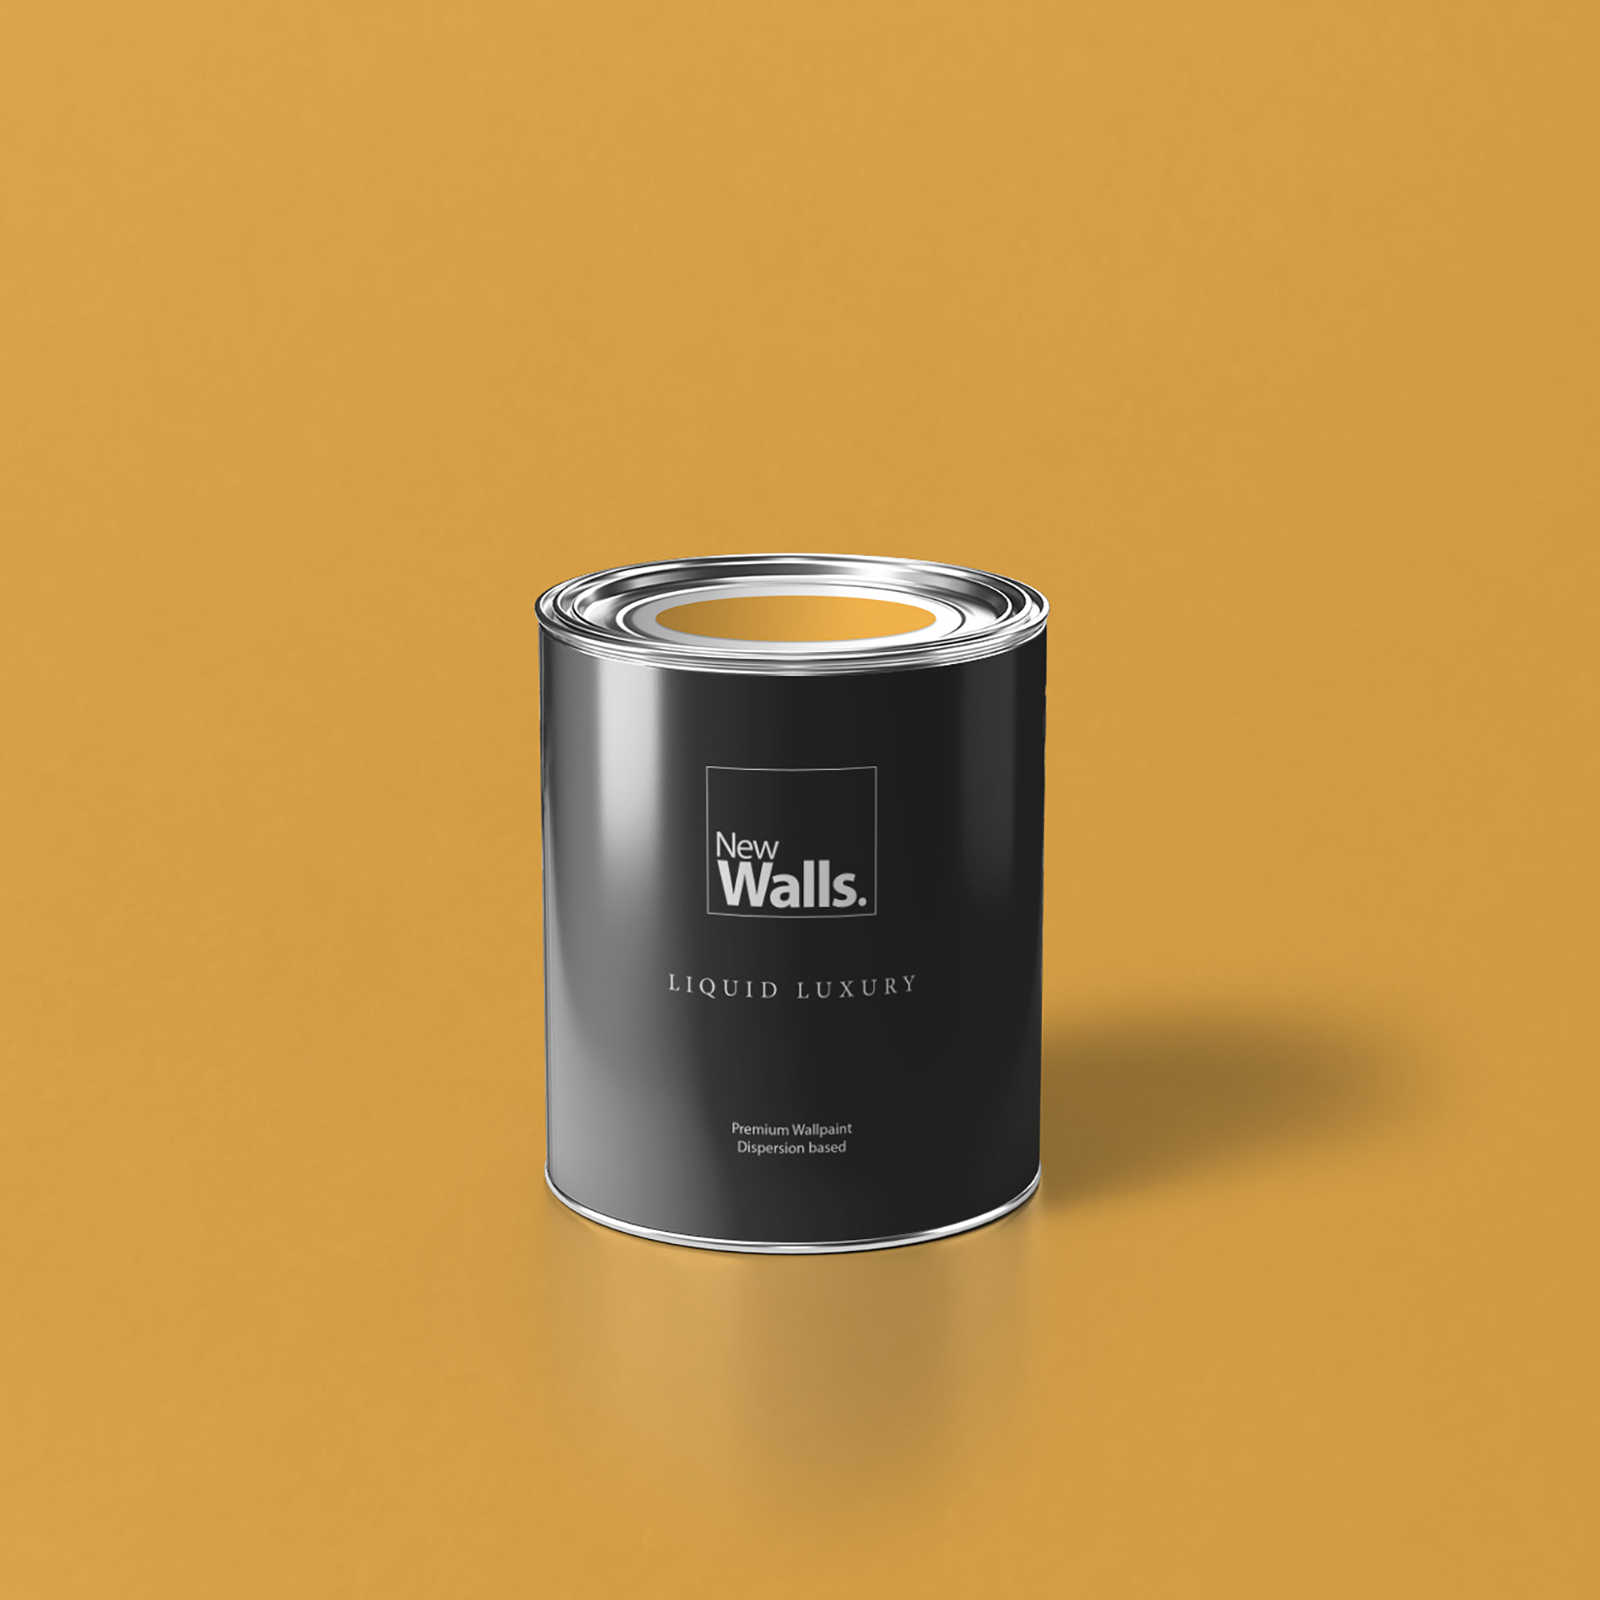         Premium Wandfarbe kräftiges Safrangelb »Juicy Yellow« NW806 – 1 Liter
    